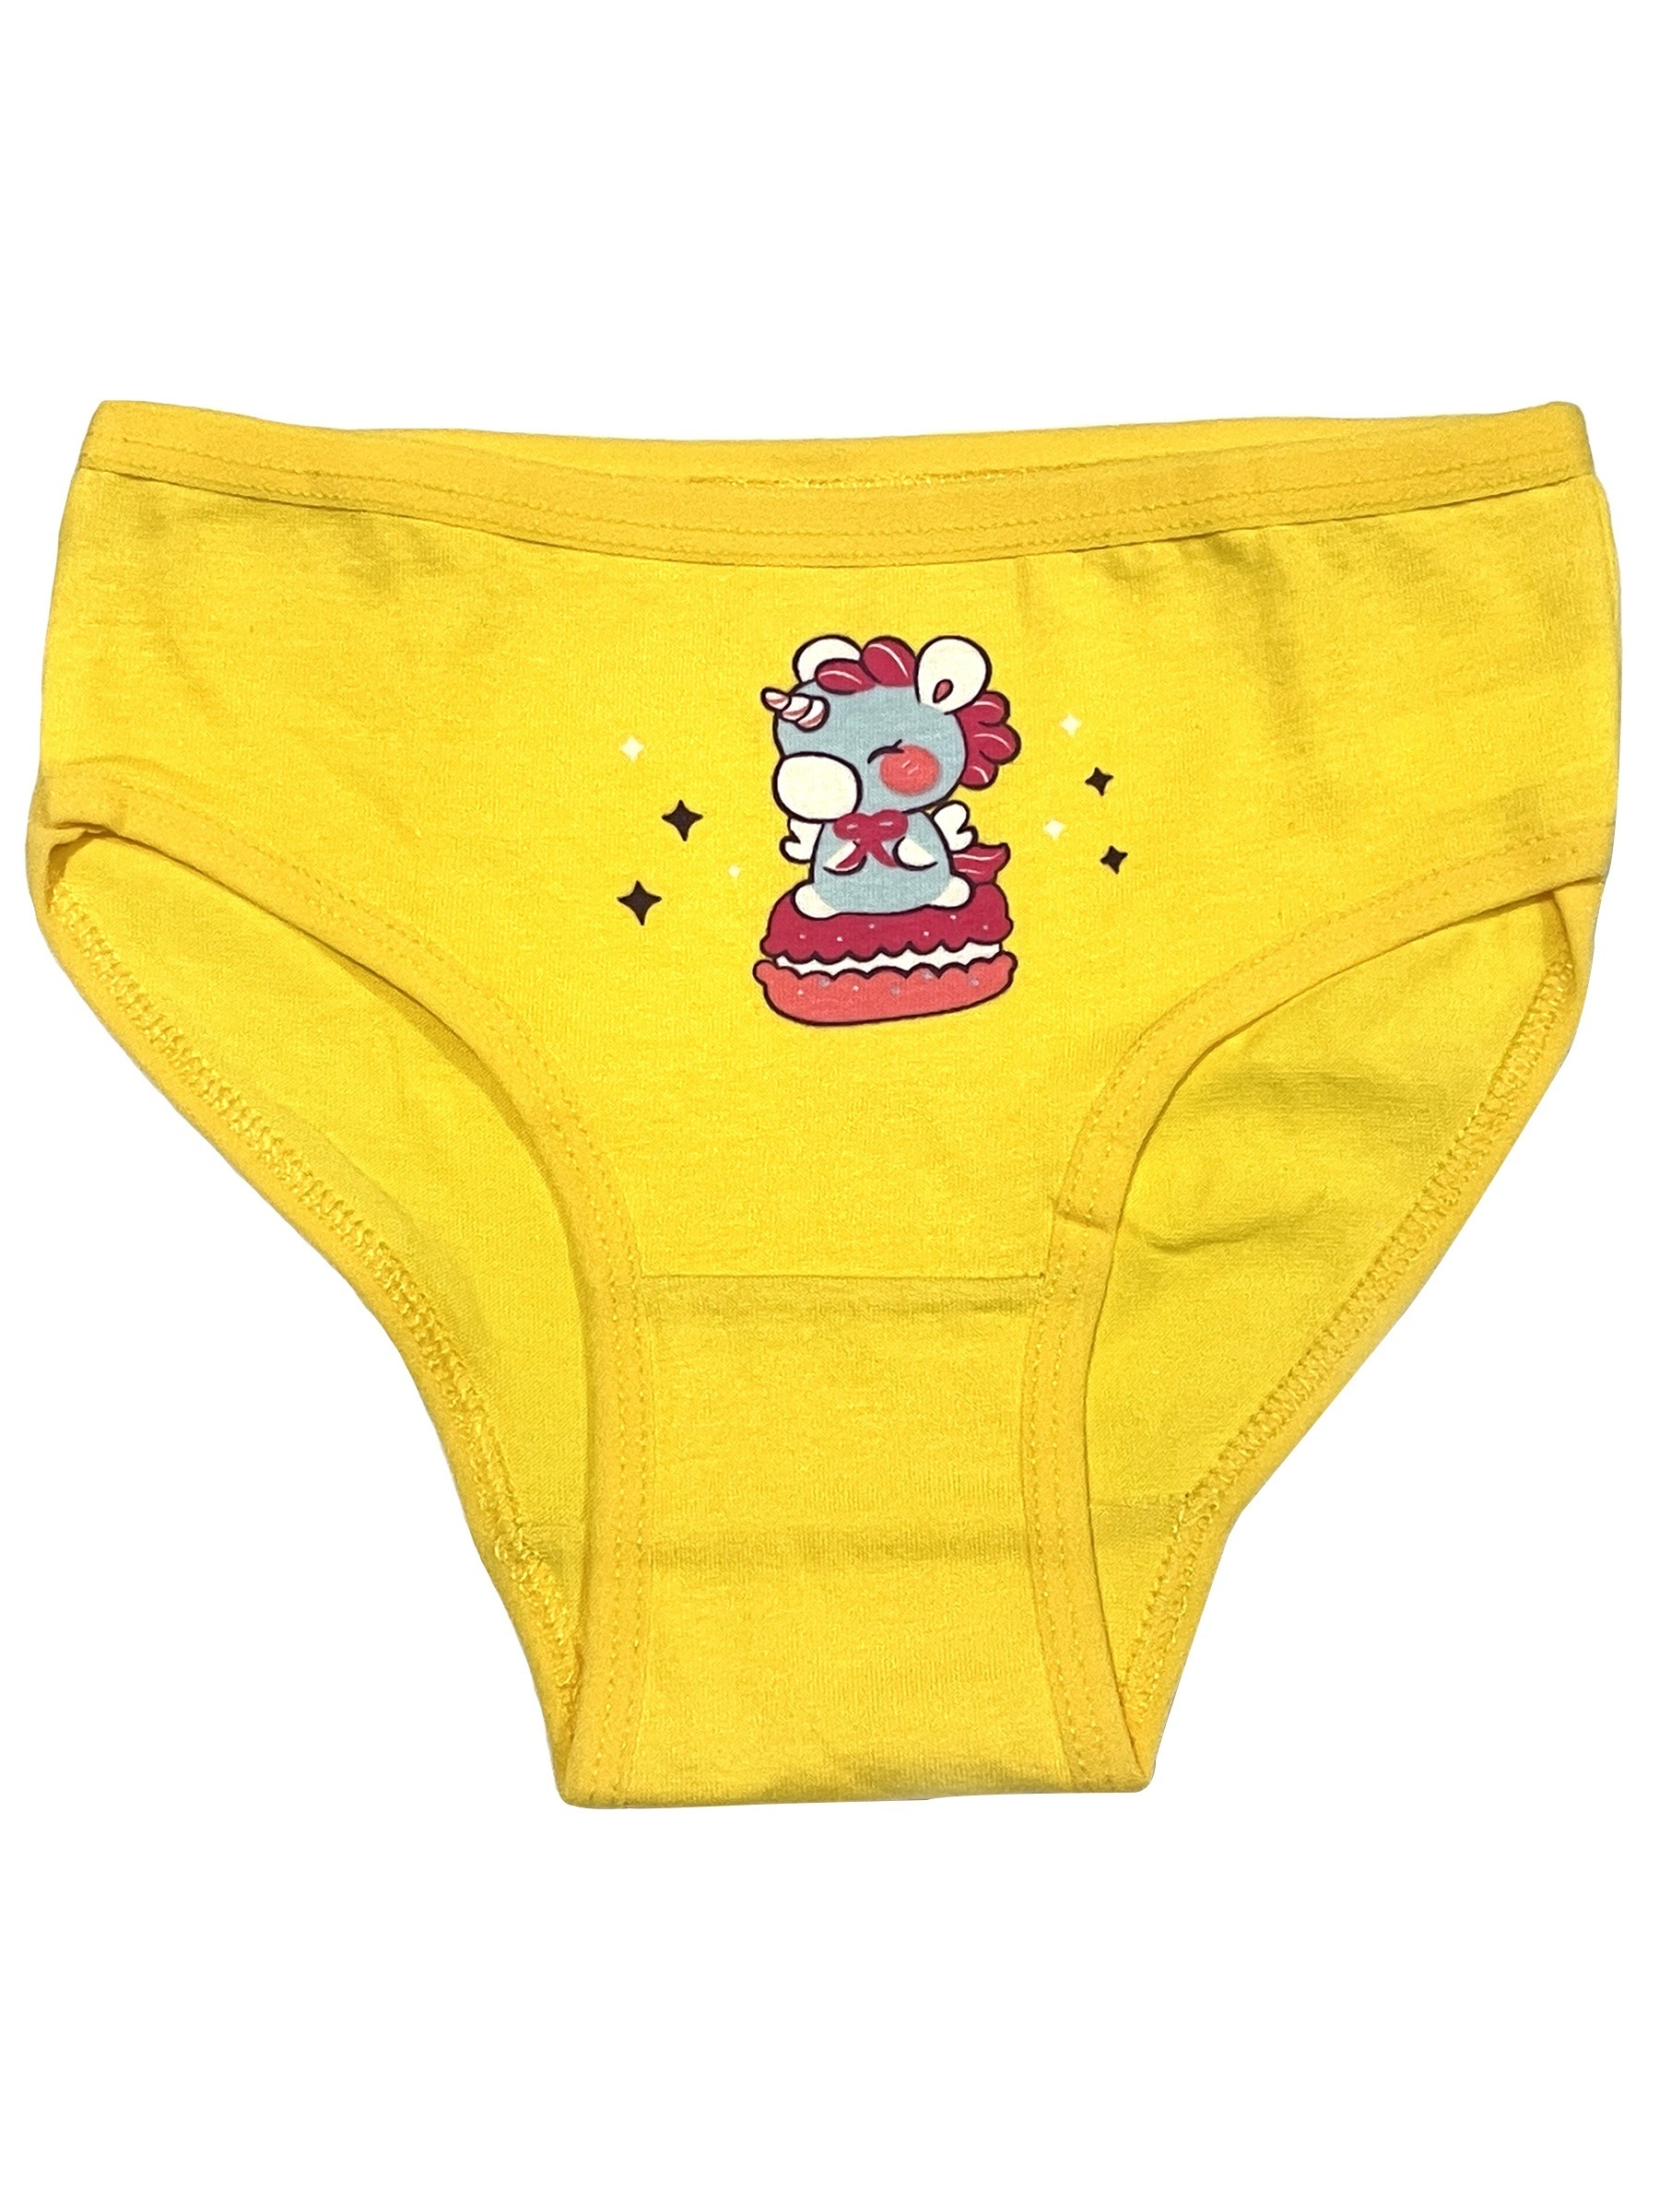 Buy Vintage Kids Underwear Girls Unused Light Yellow Cotton